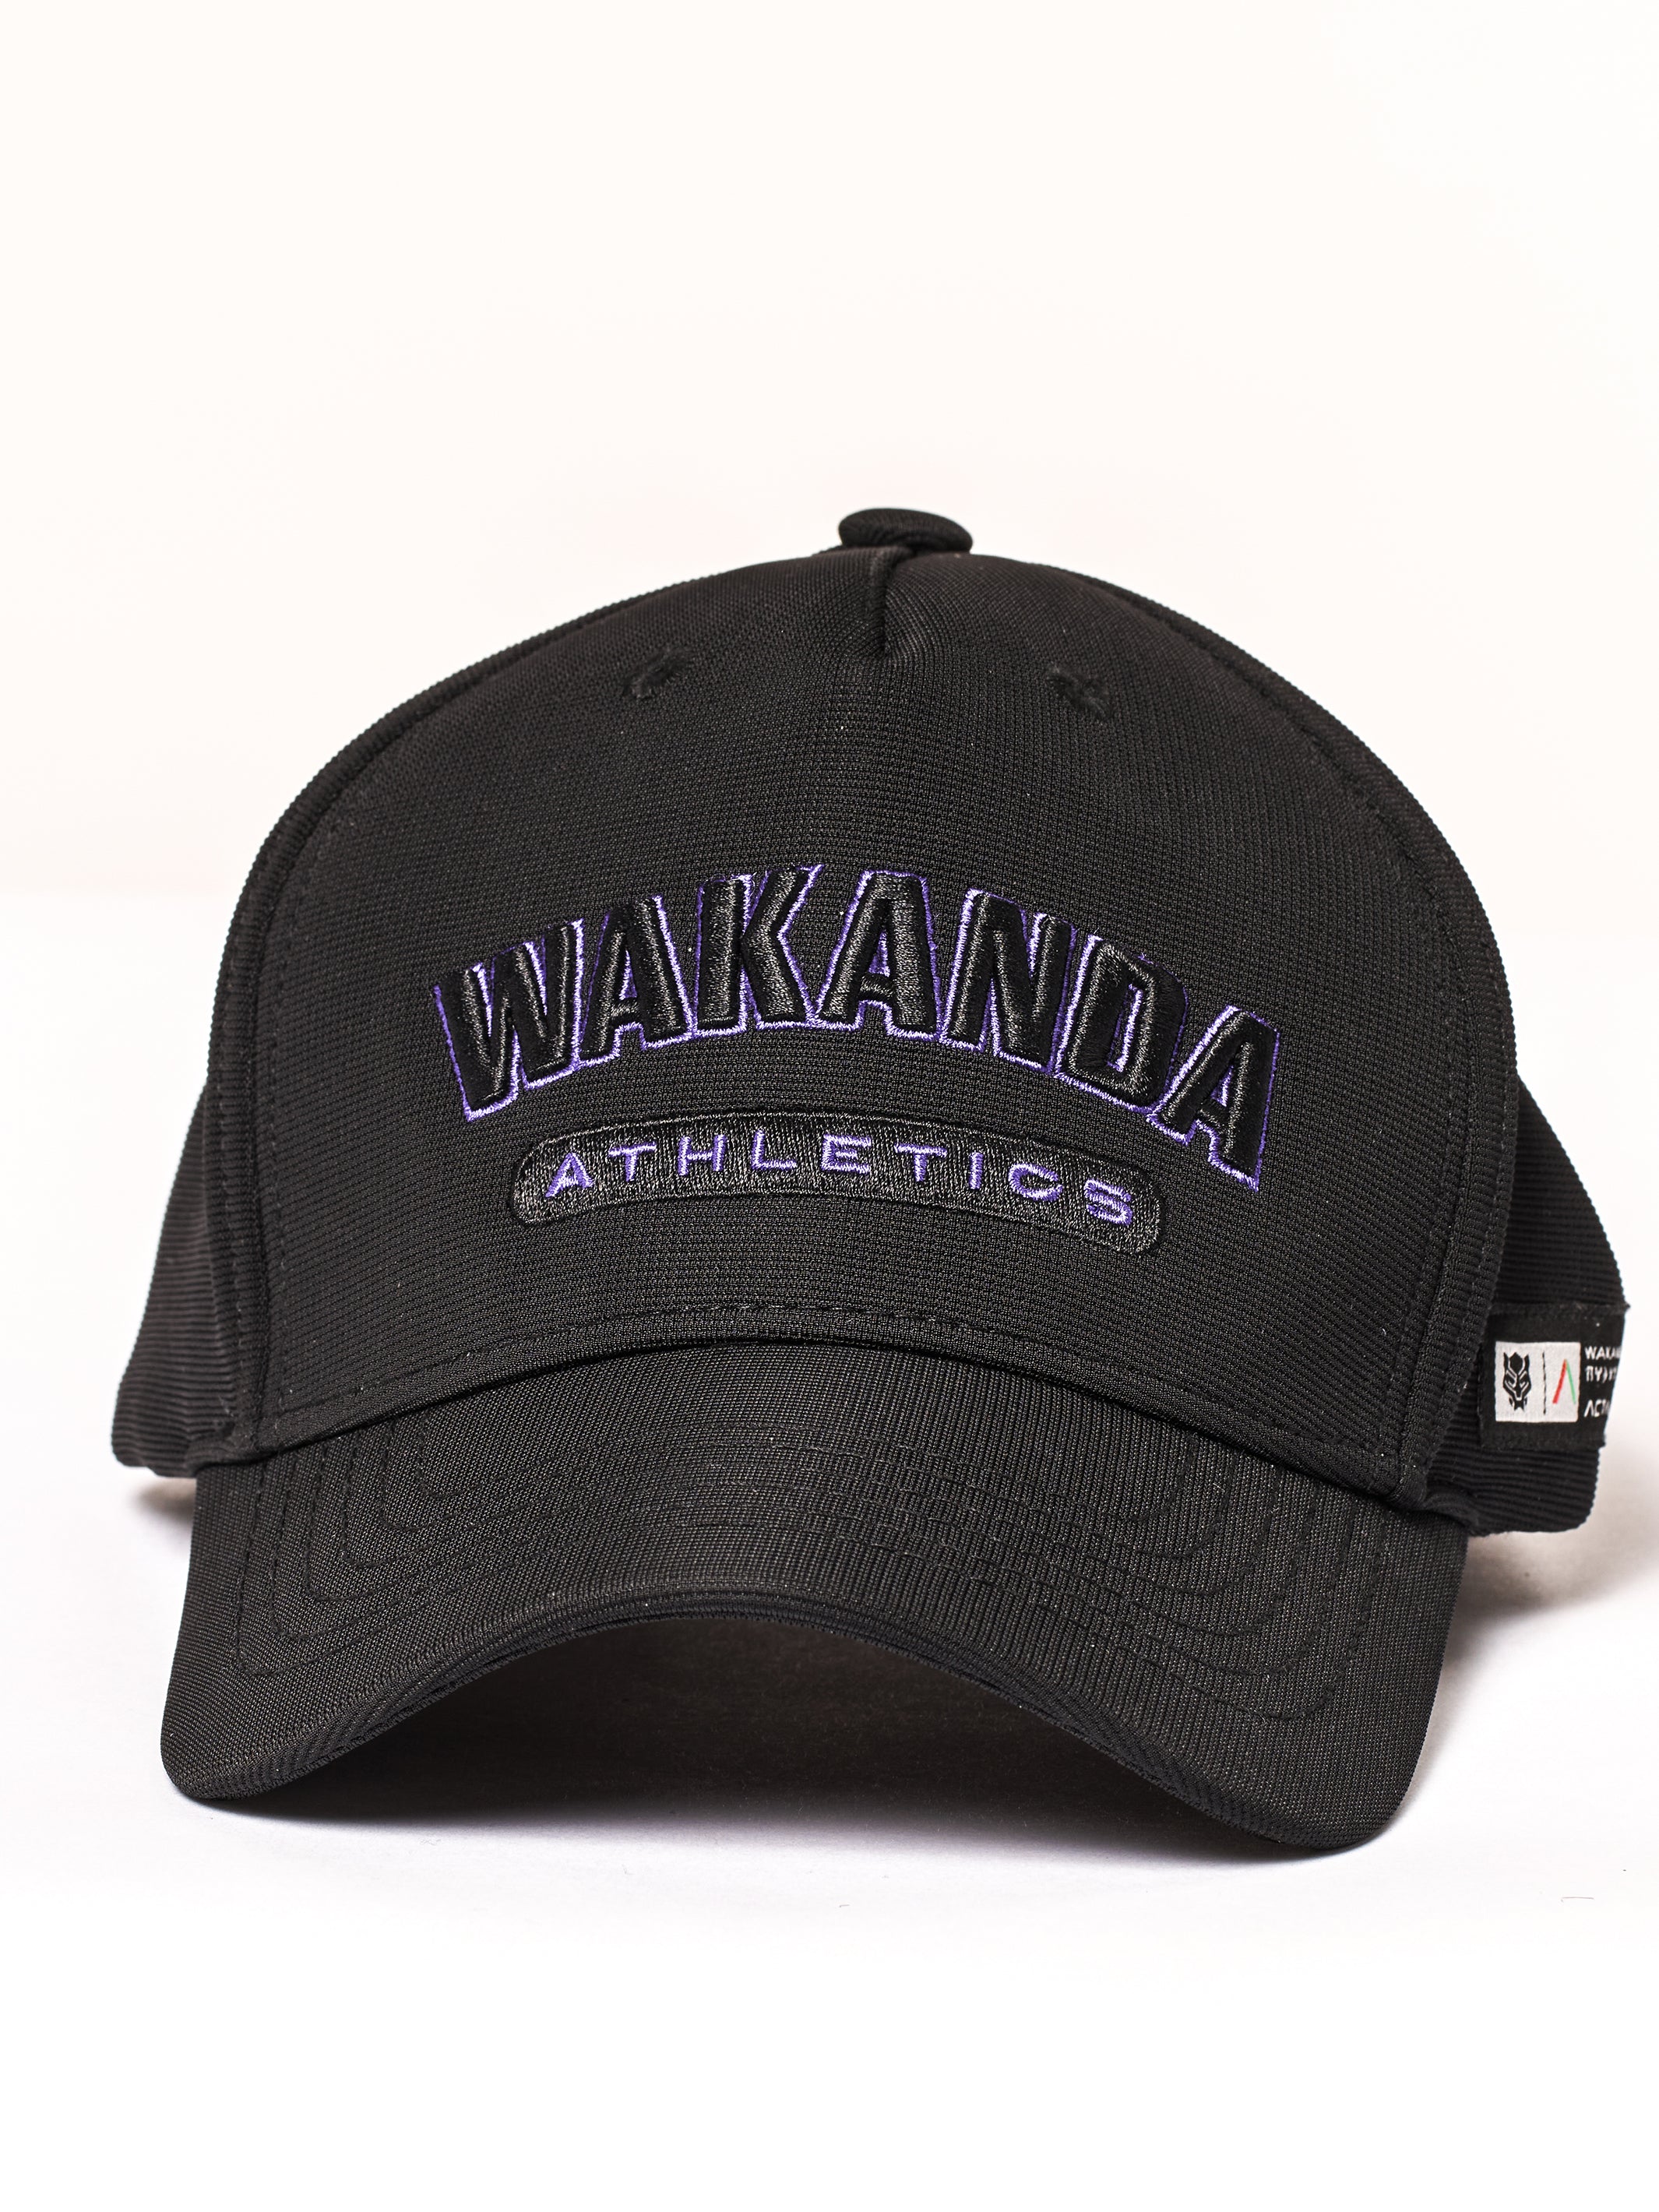 Wakanda Athletics Performance Hat